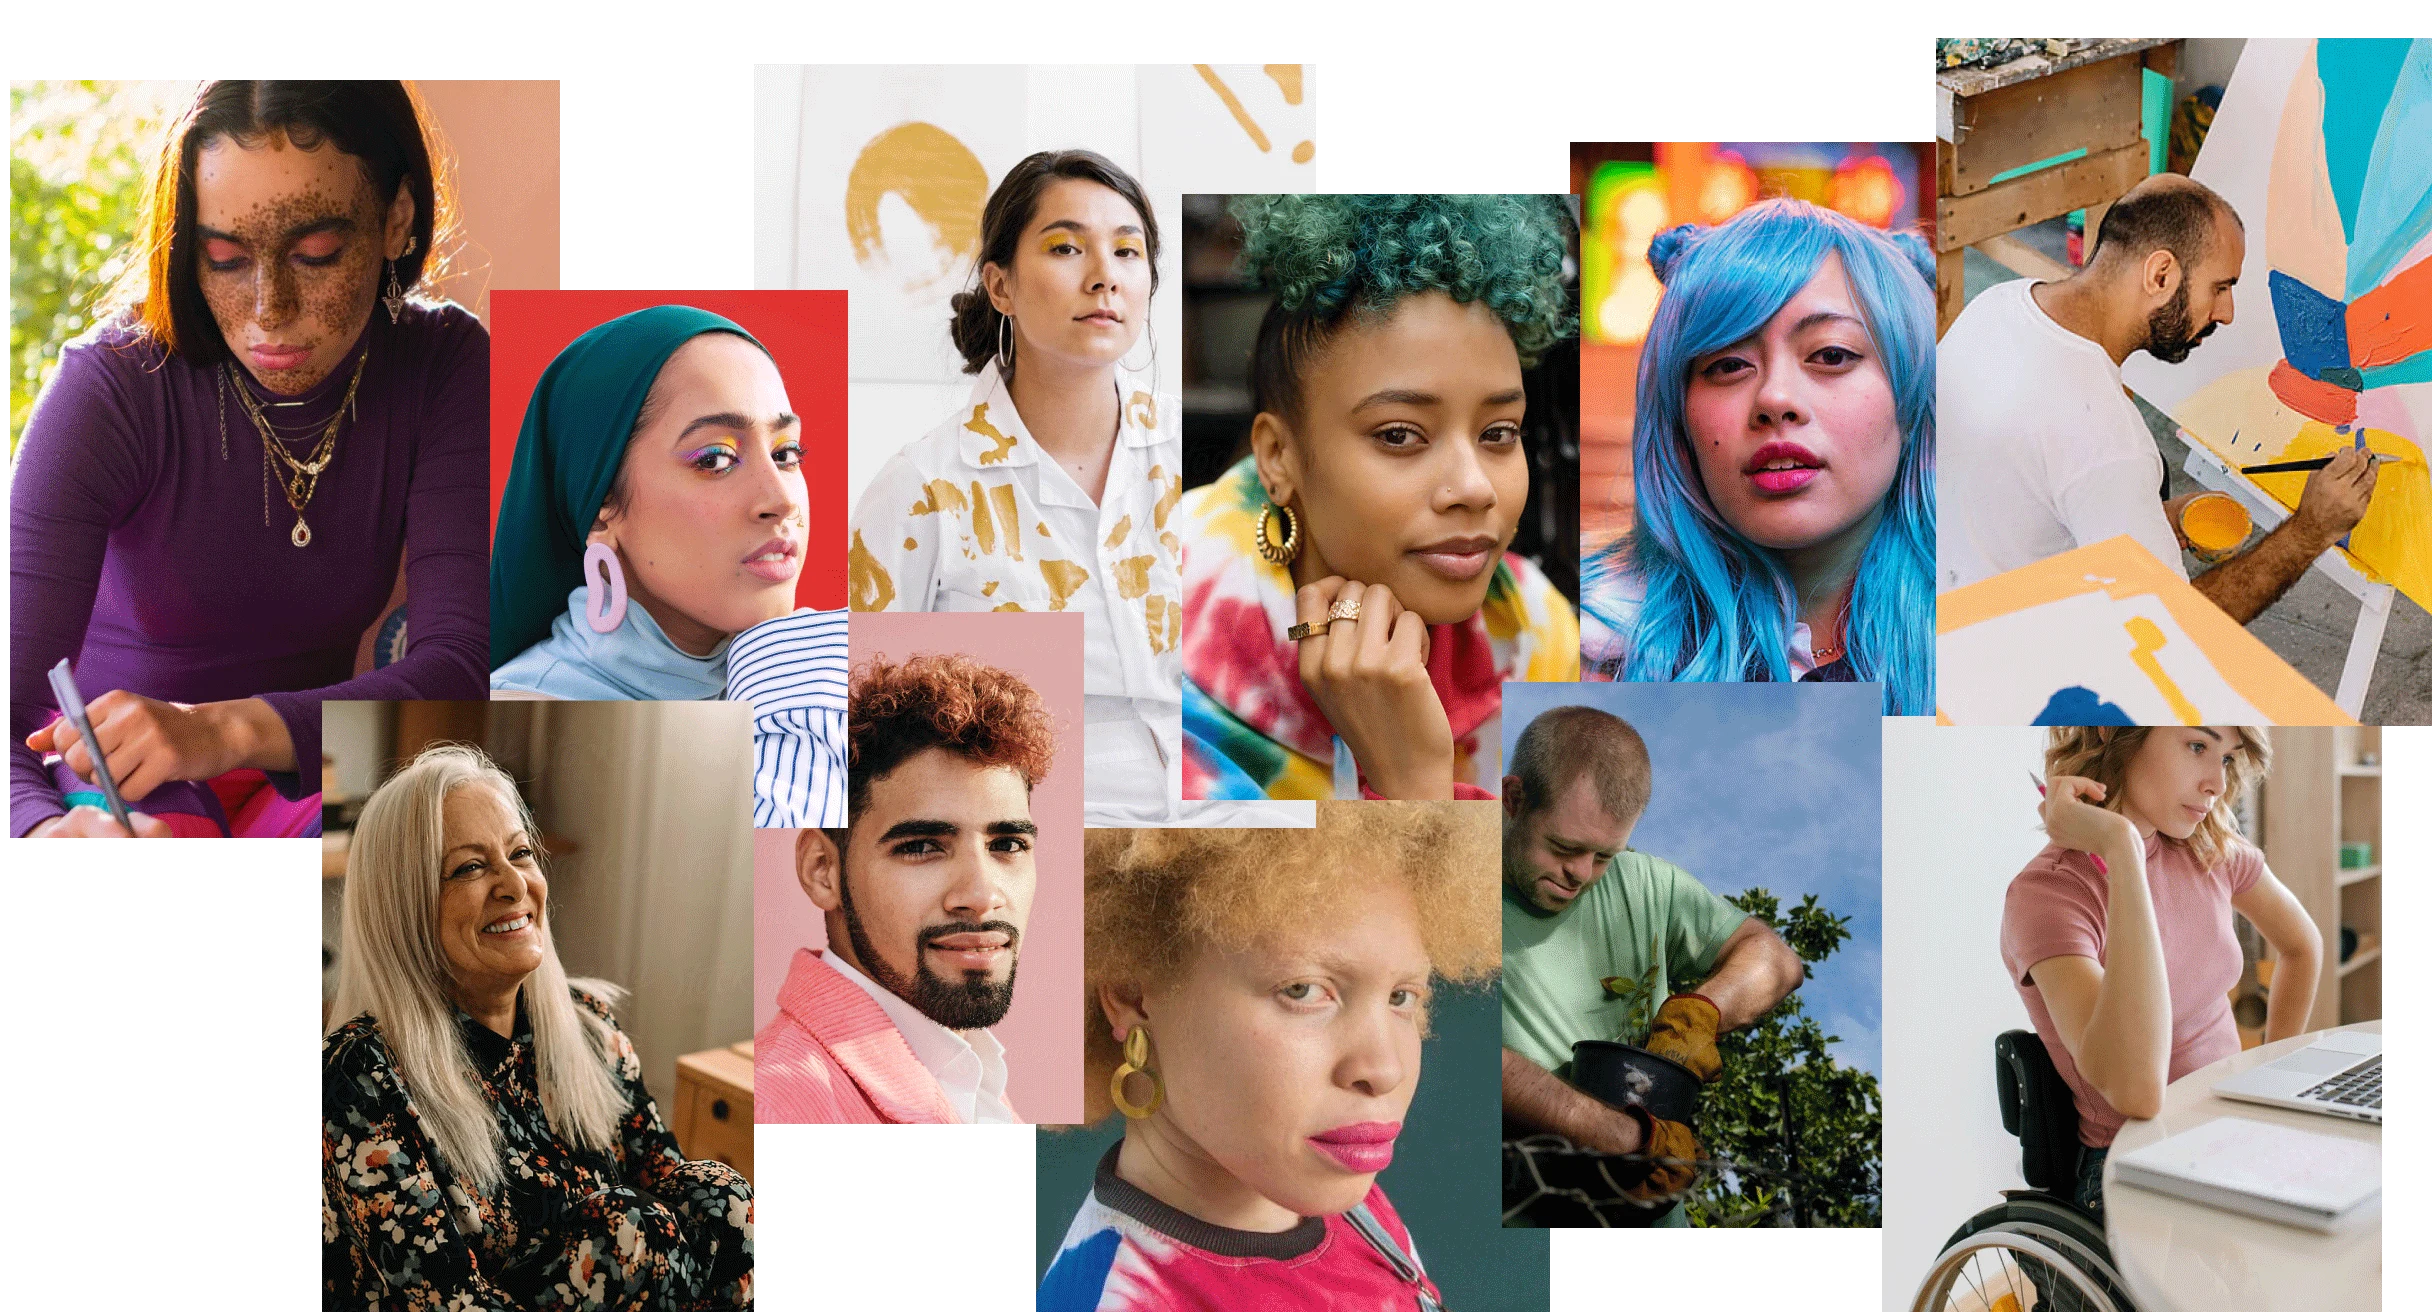 Un collage de personas que representan diversas razas, etnias, géneros, edades y capacidades